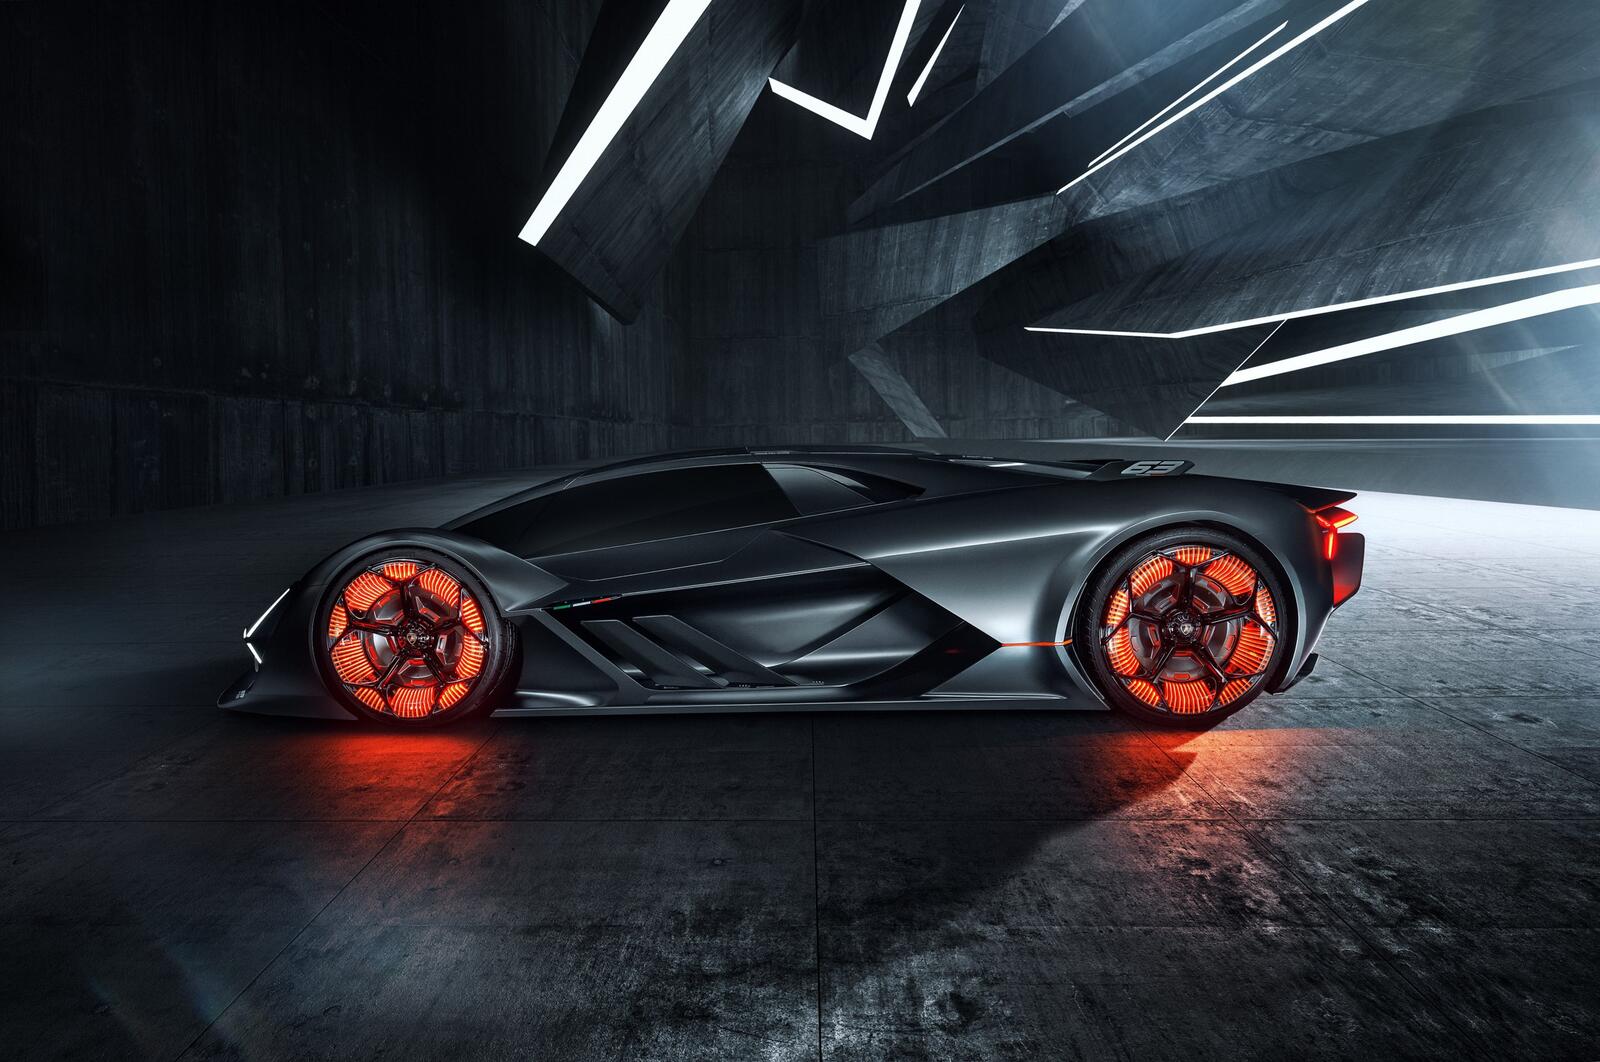 Wallpapers Lamborghini Concept Cars electric cars on the desktop